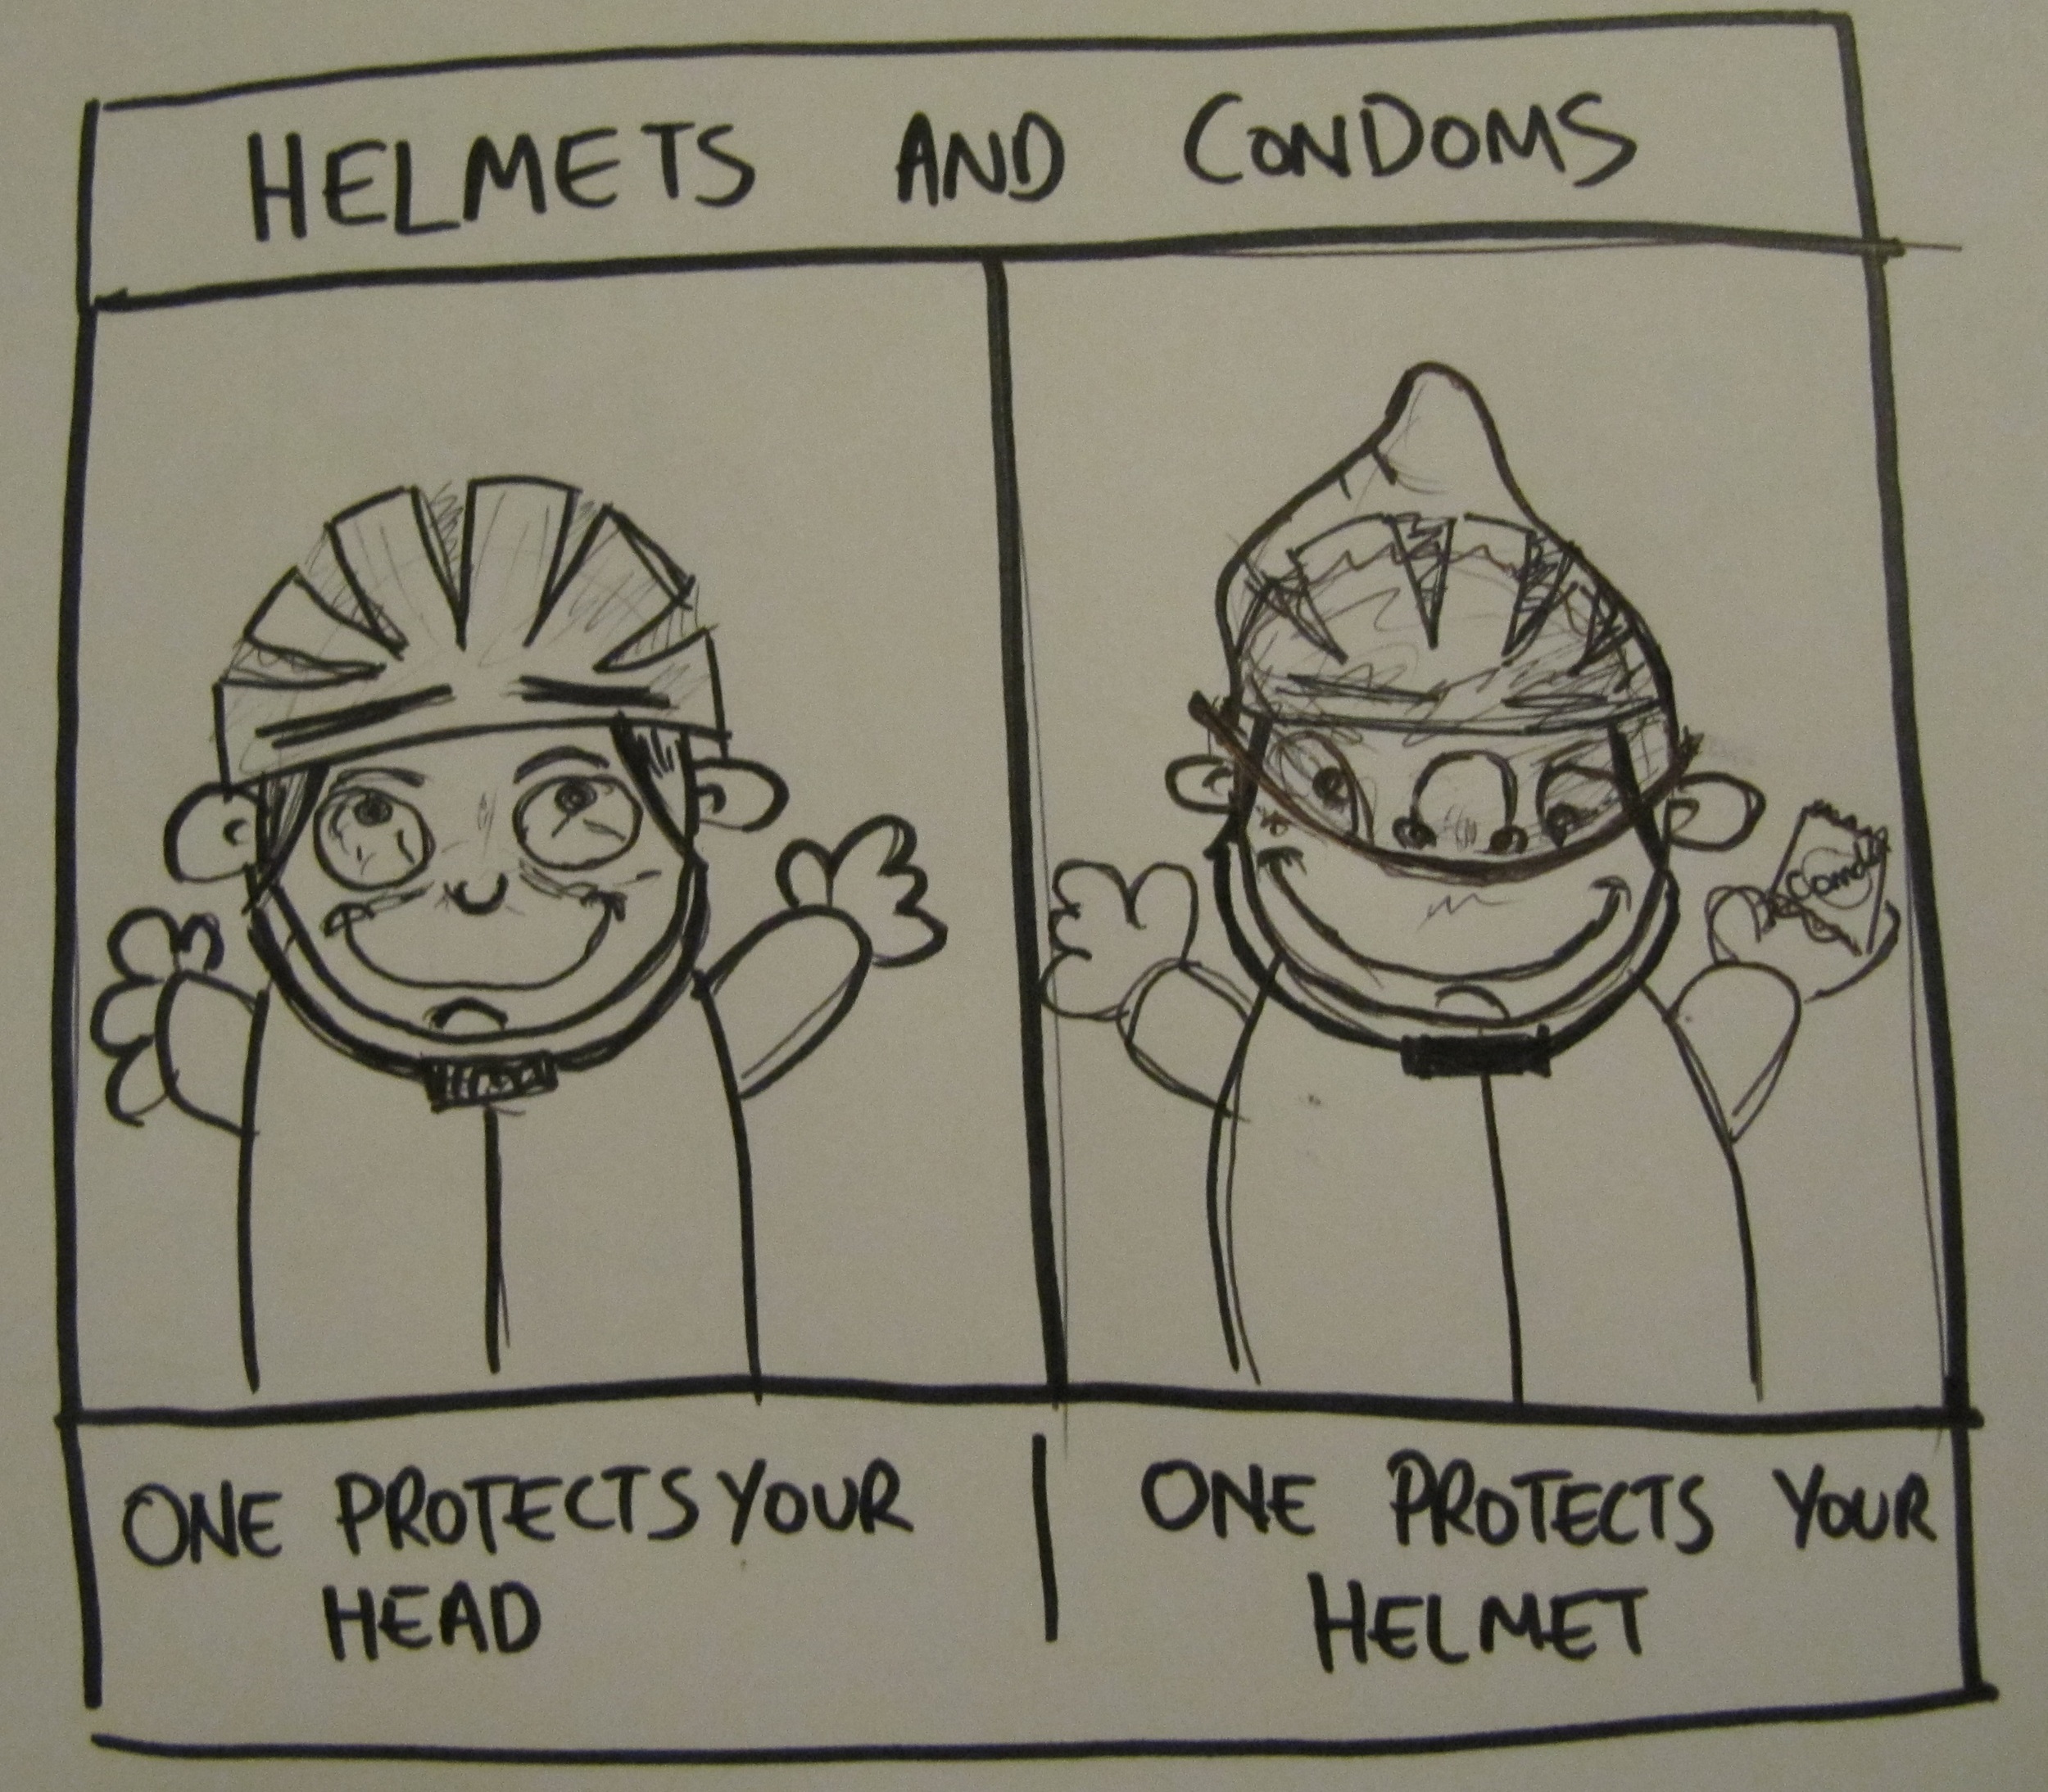 Helmets and Condoms